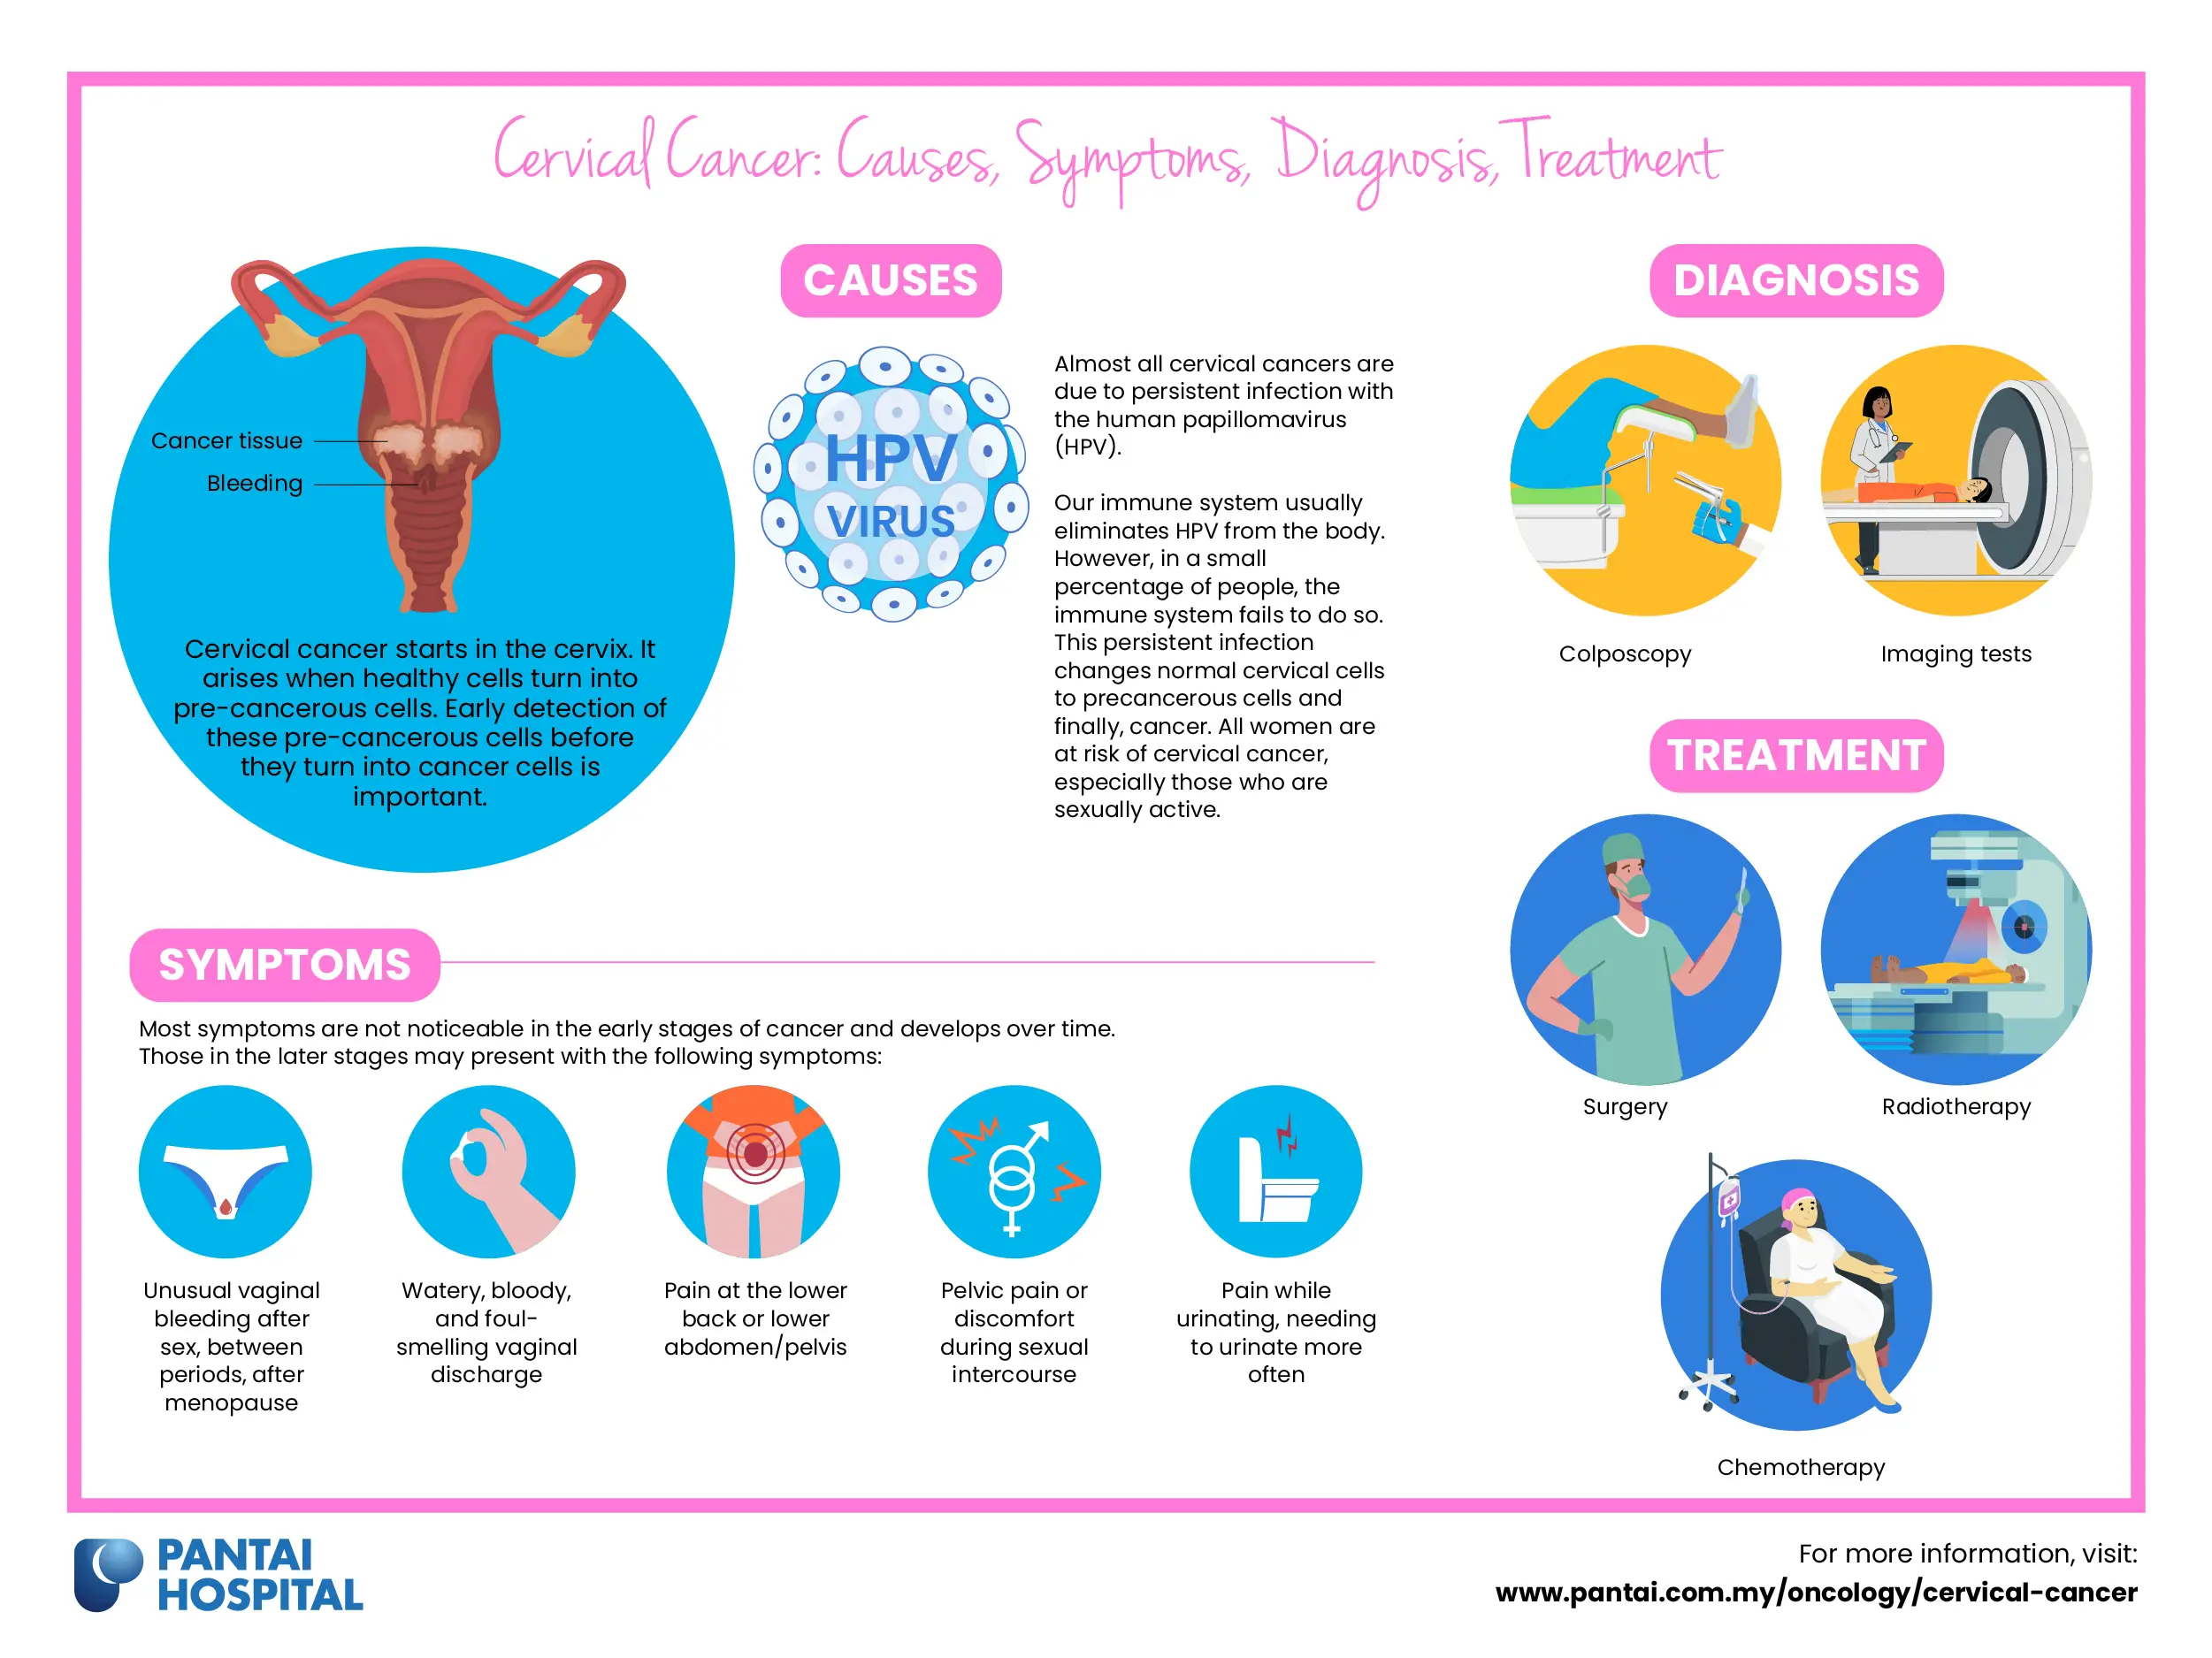 Cervical Cancer: Causes, Symptoms, Diagnosis, Treatment | Pantai Hospital